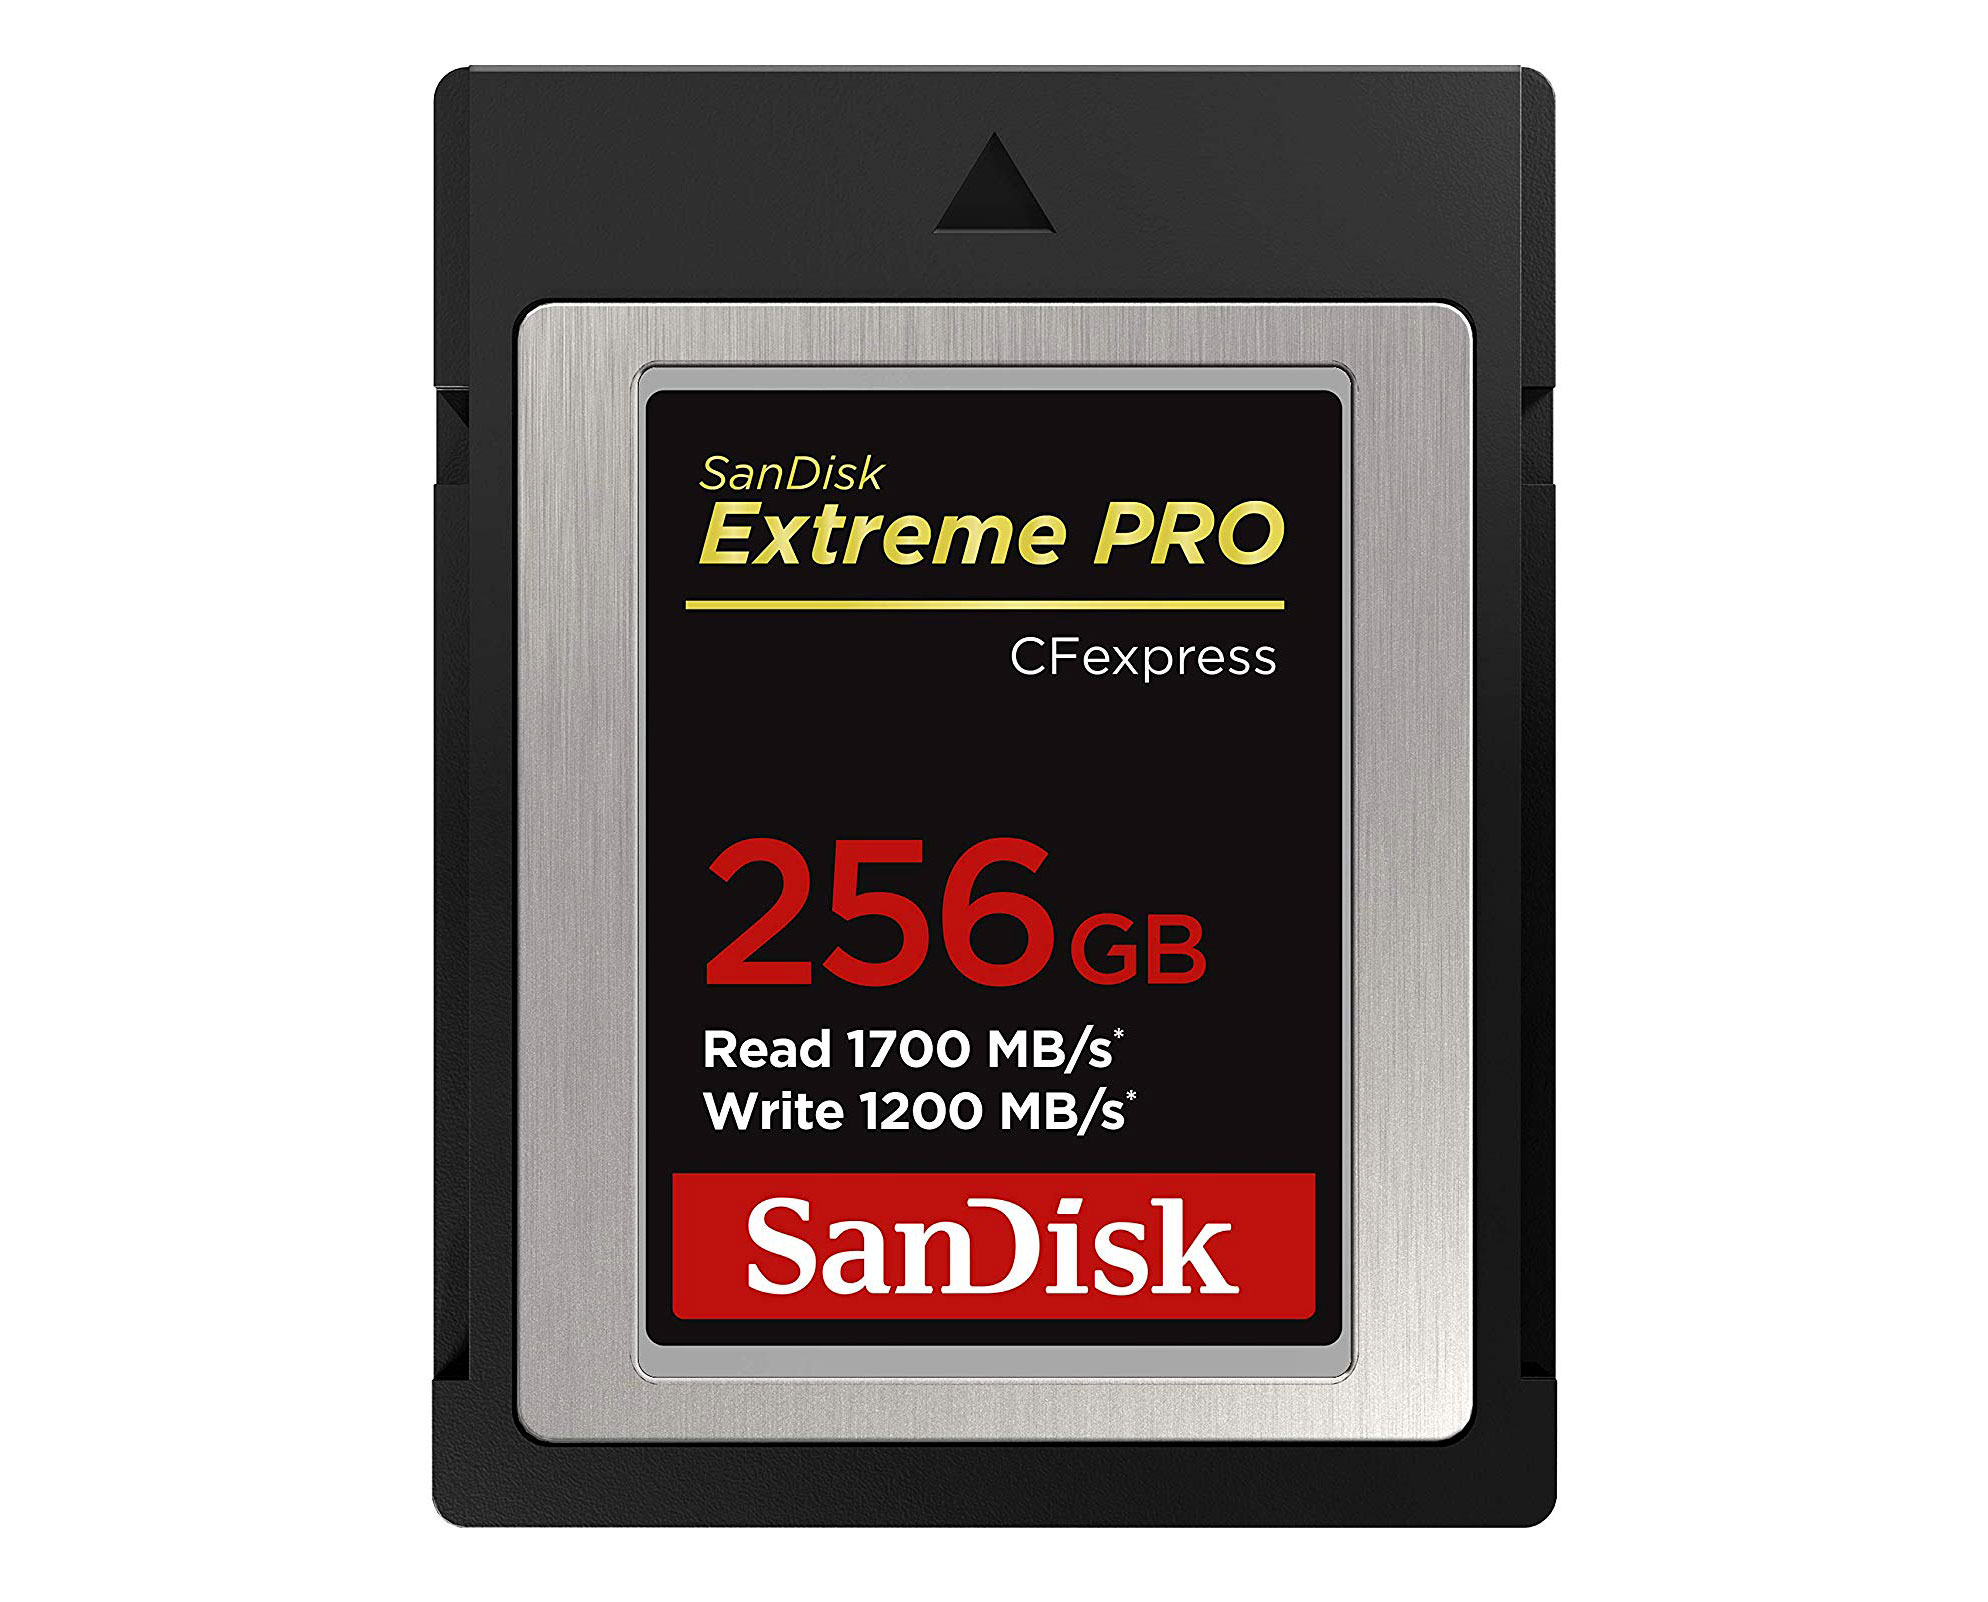 Sandisk CFexpress Extreme Pro 256GB